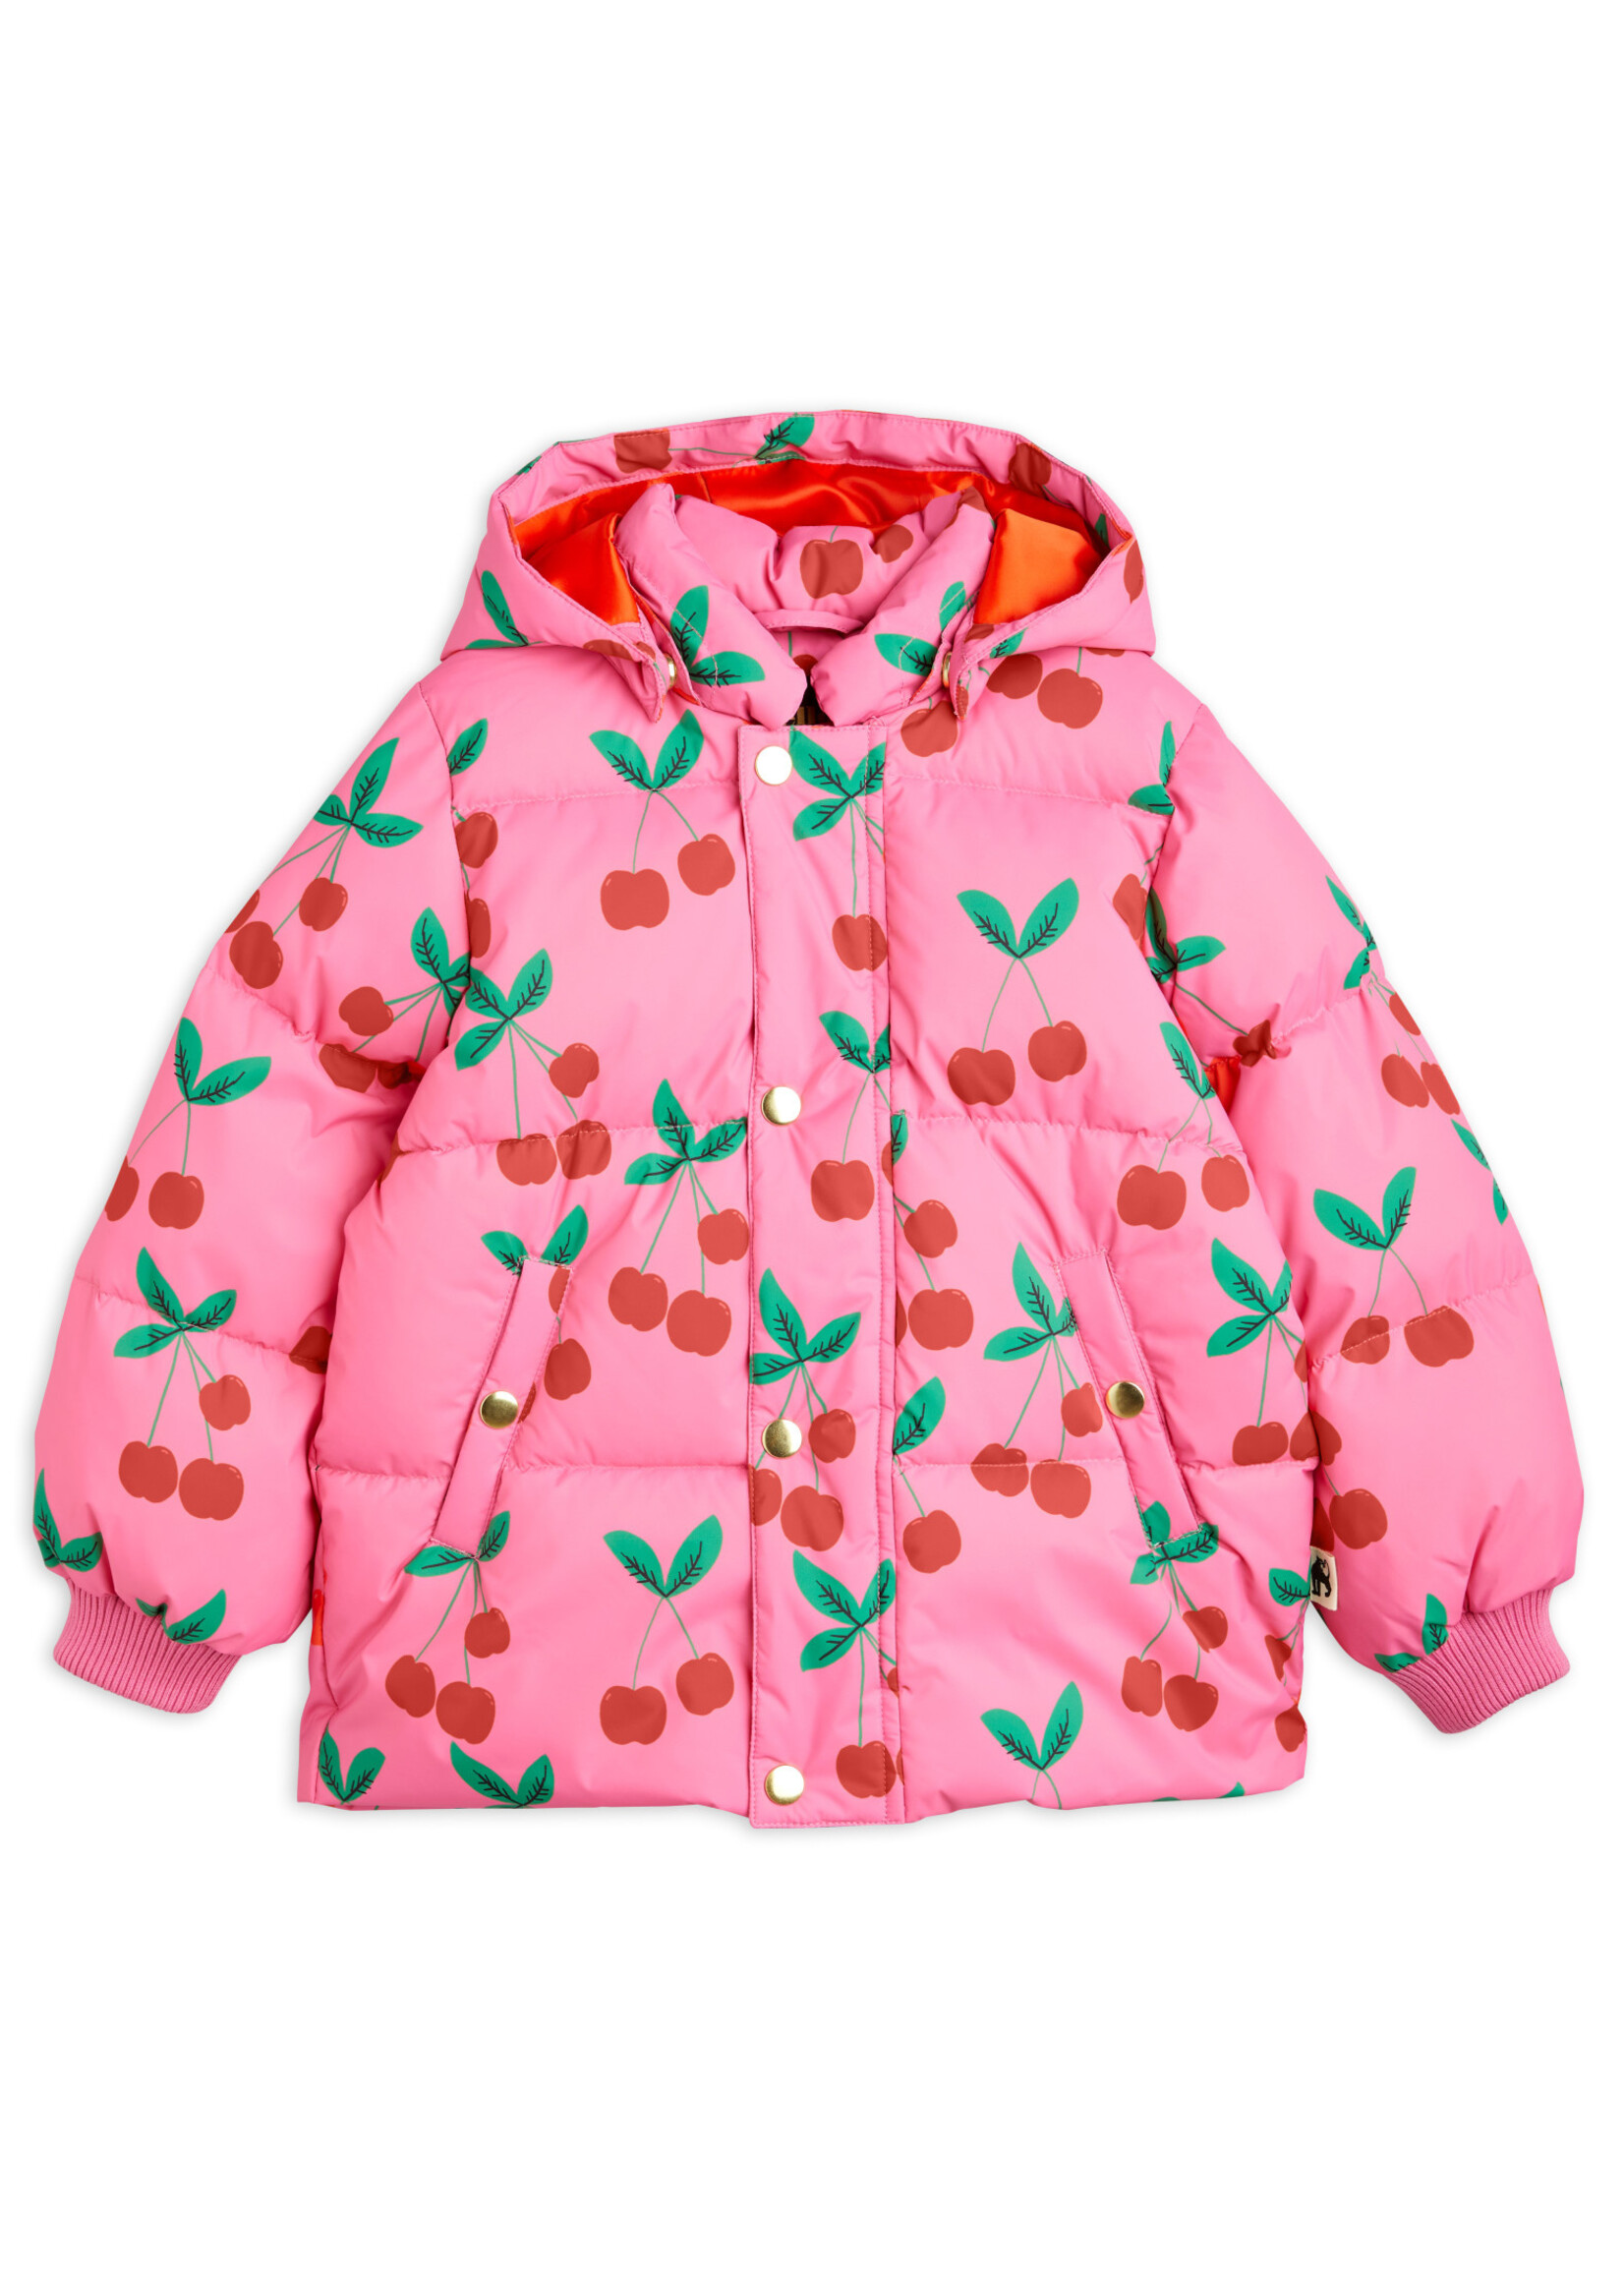 MINI RODINI Mini Rodini - Cherries aop puffer jacket - Pink